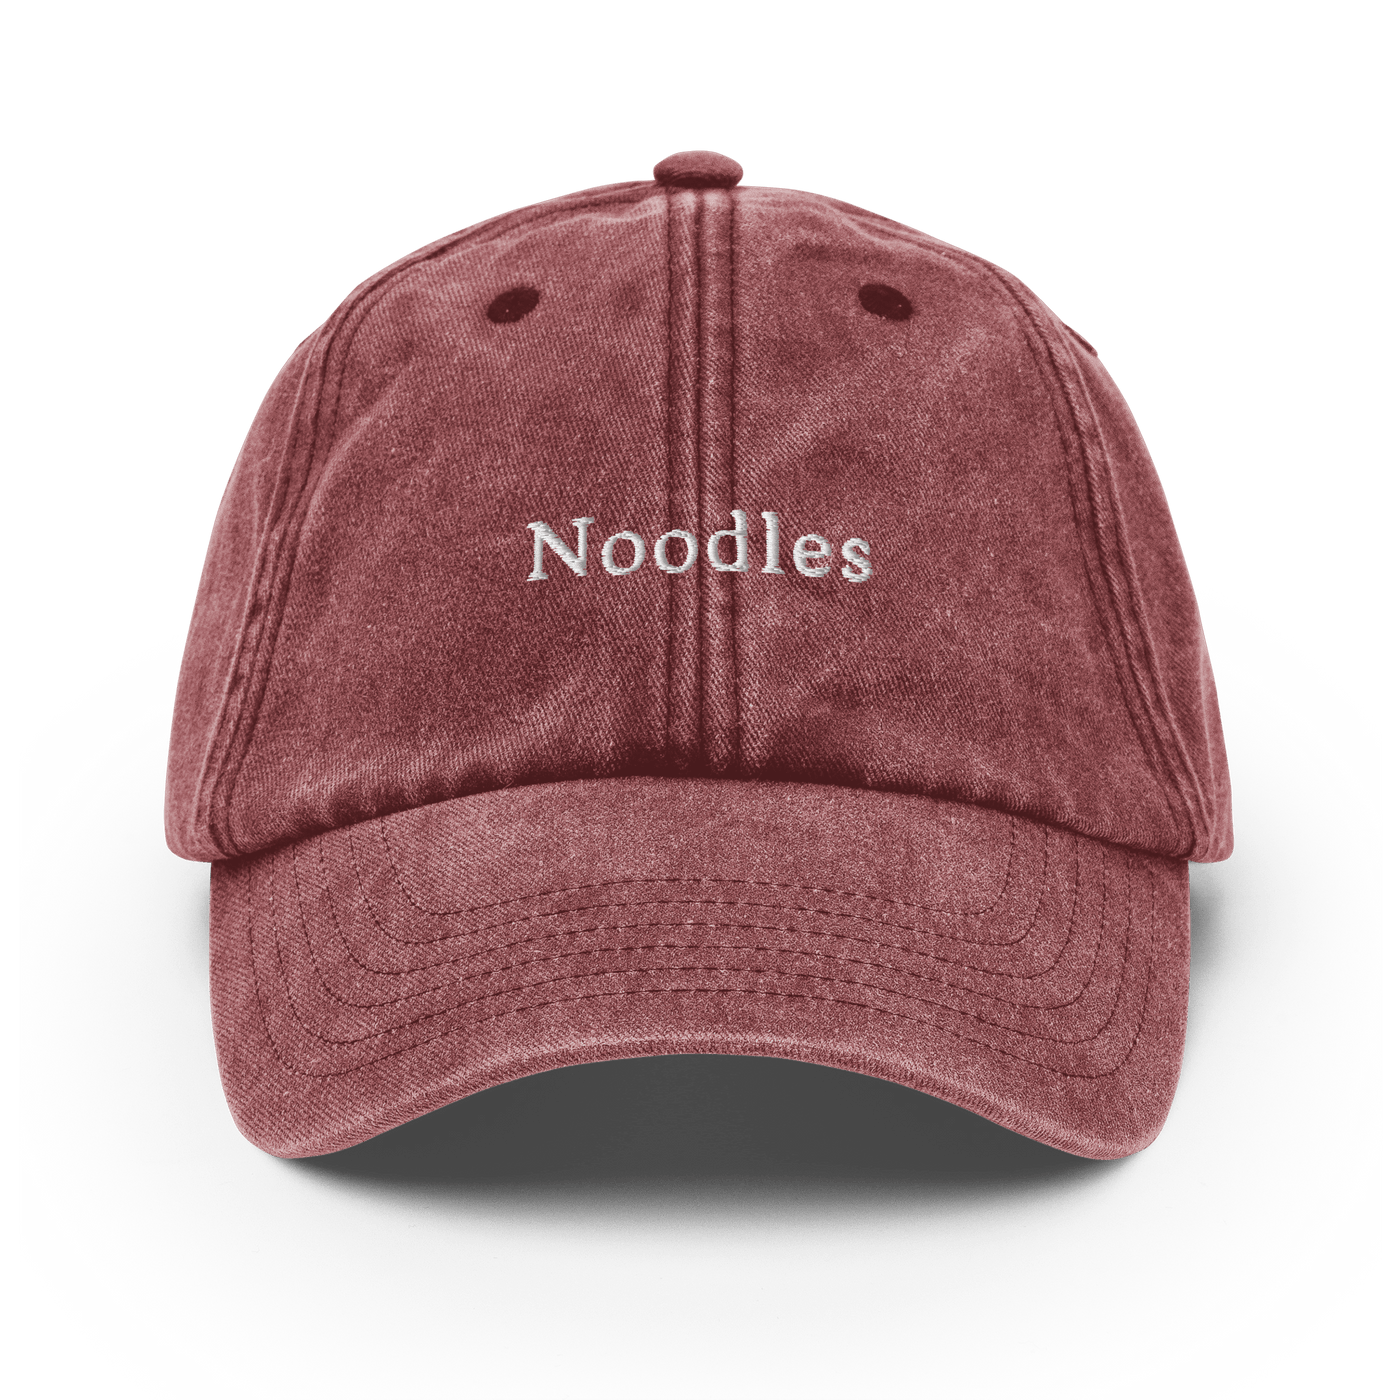 Noodles Vintage Hat - Vintage Red - - Just Another Cap Store